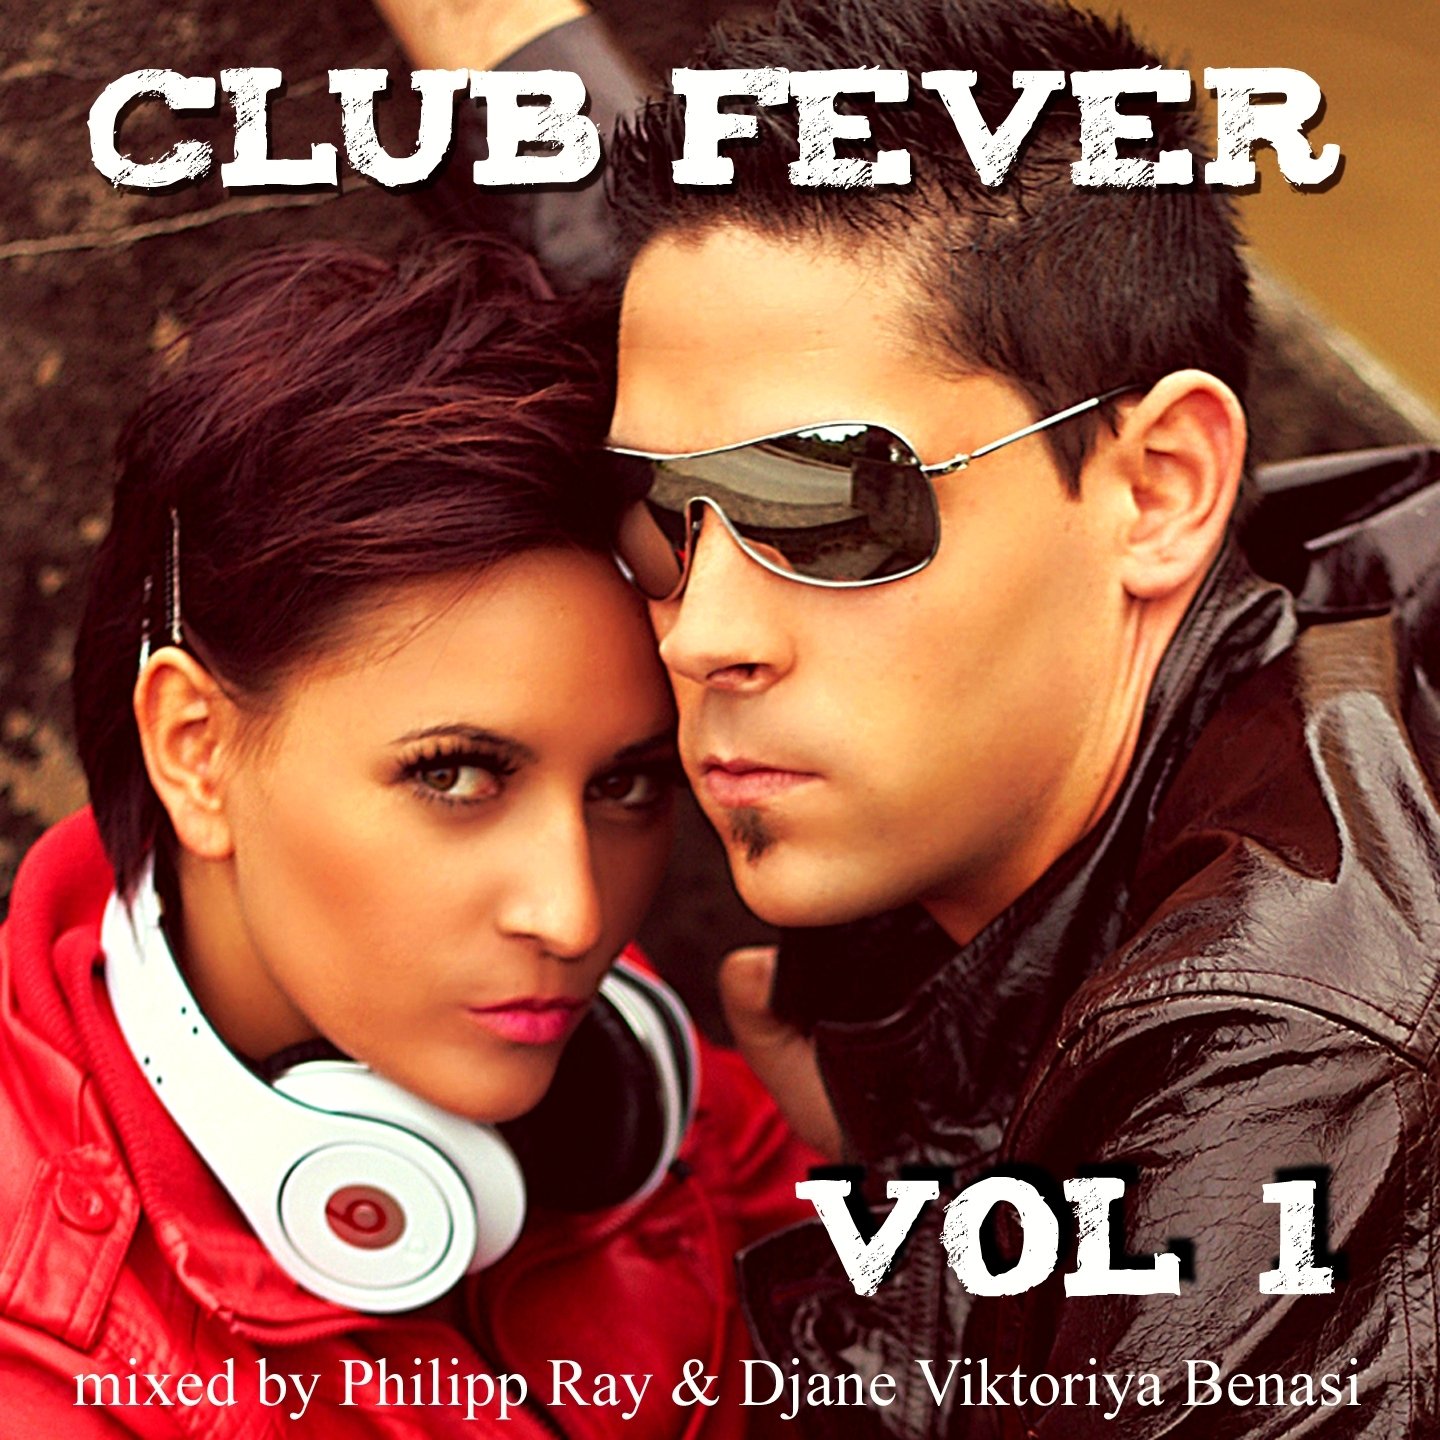 Nightclub Fever. Melody Club Fever Fever кто на обложке.